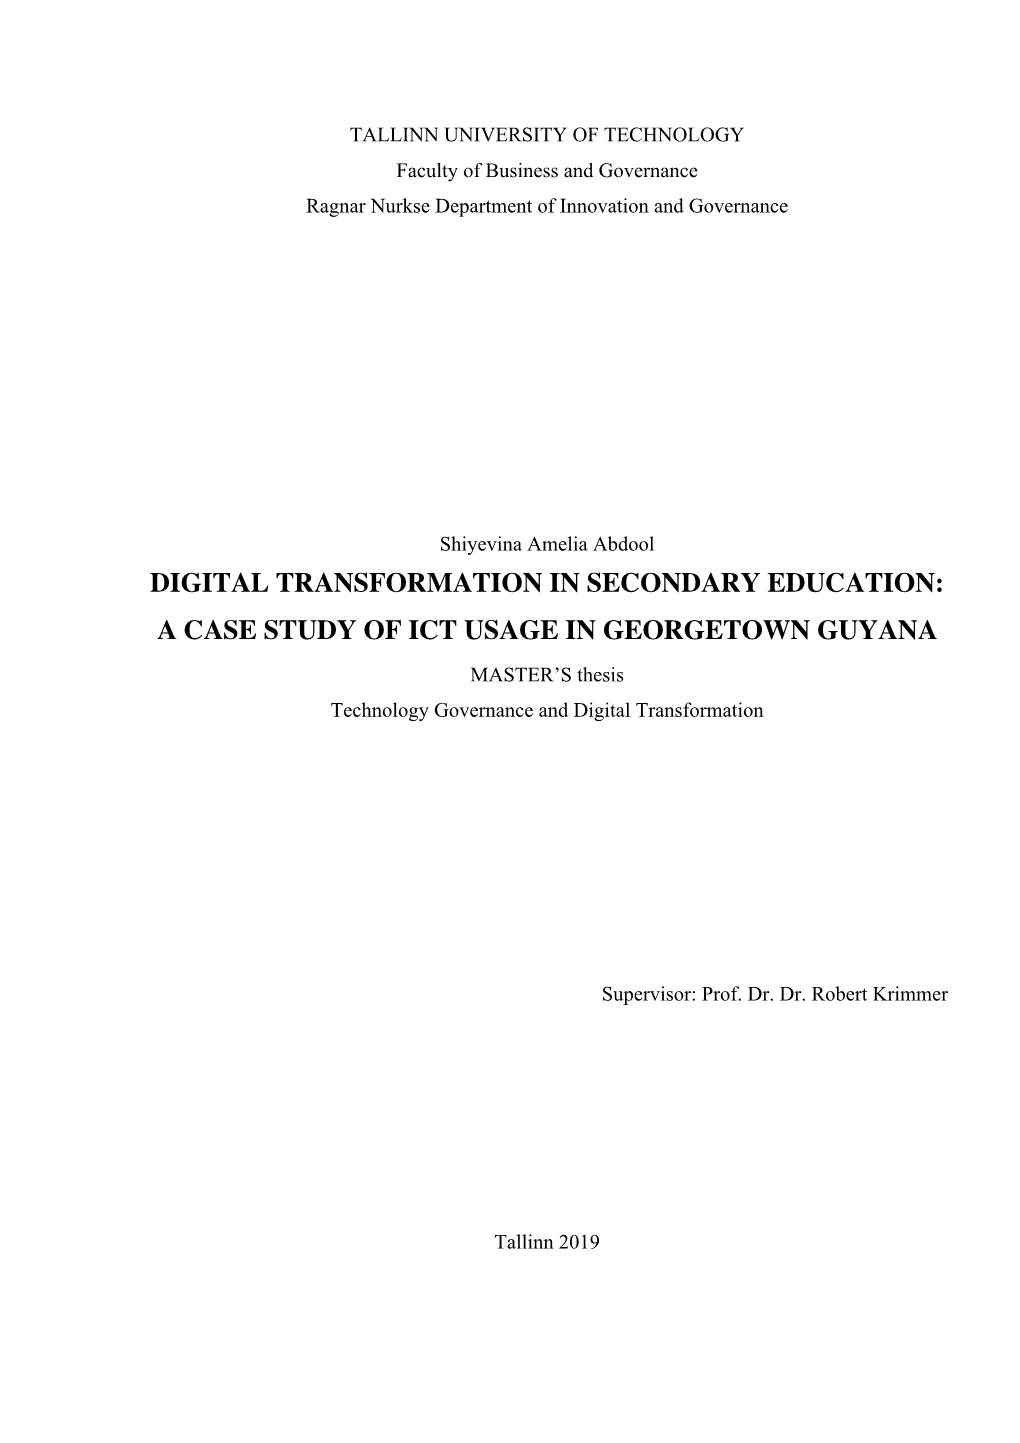 master thesis on digital transformation